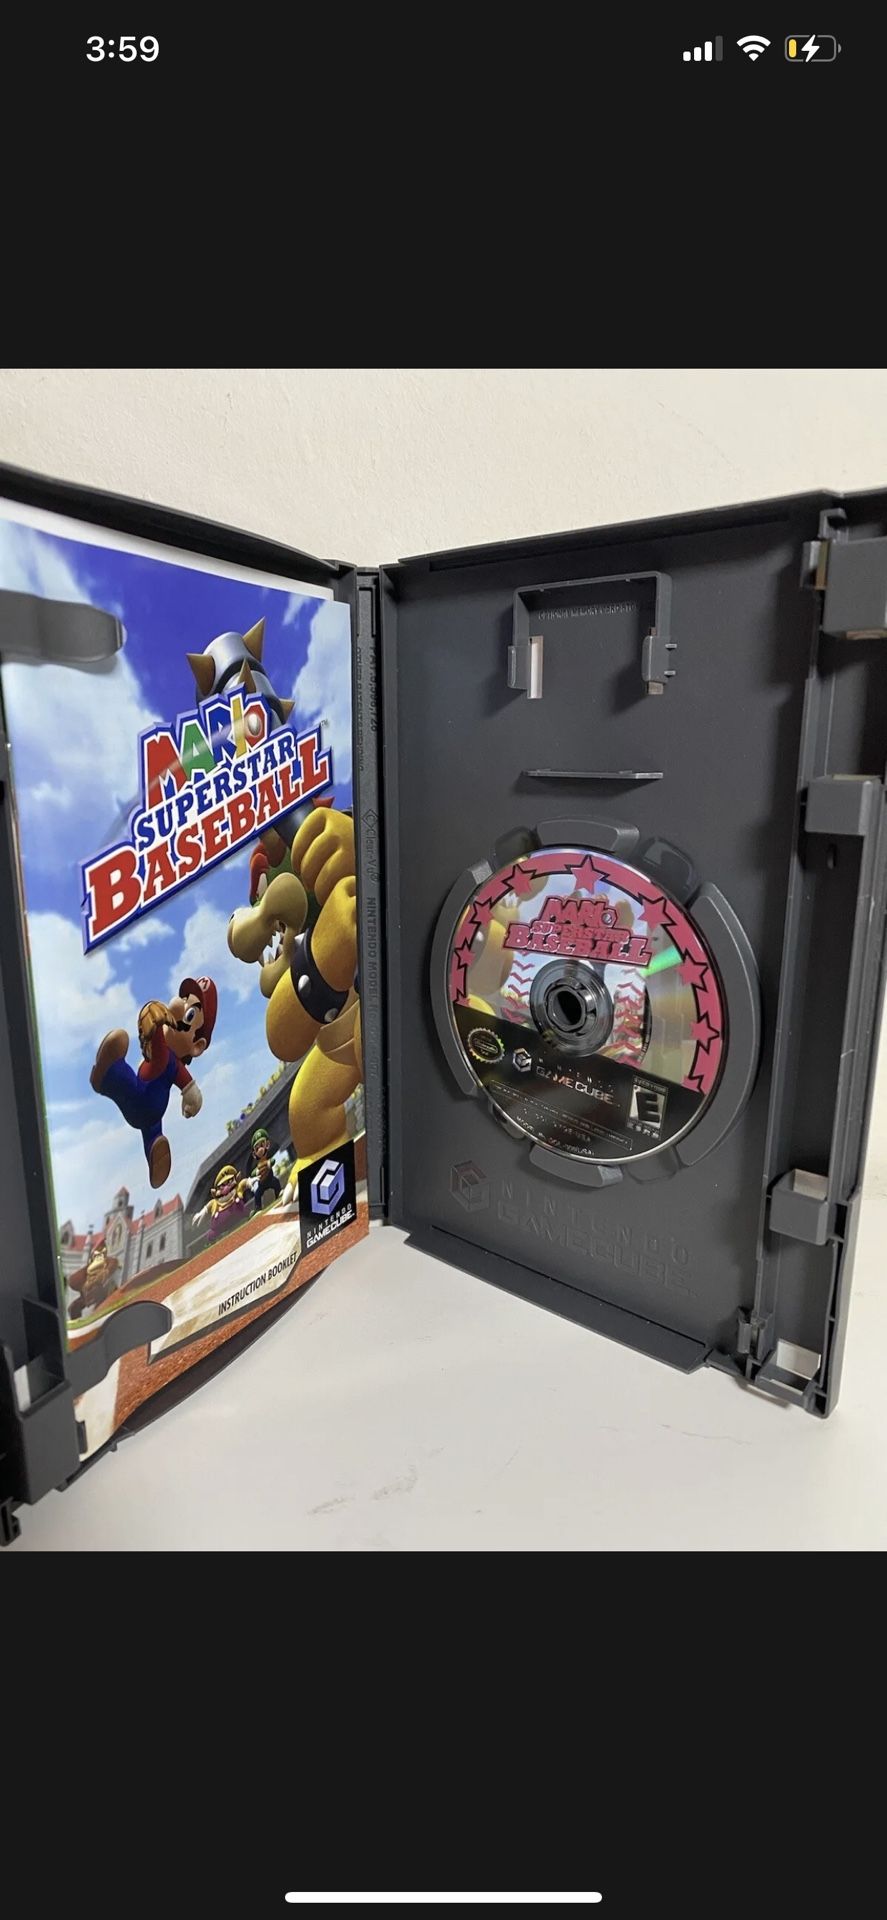 Mario Superstar Baseball (Nintendo GameCube, 2005) Complete CIB - Tested